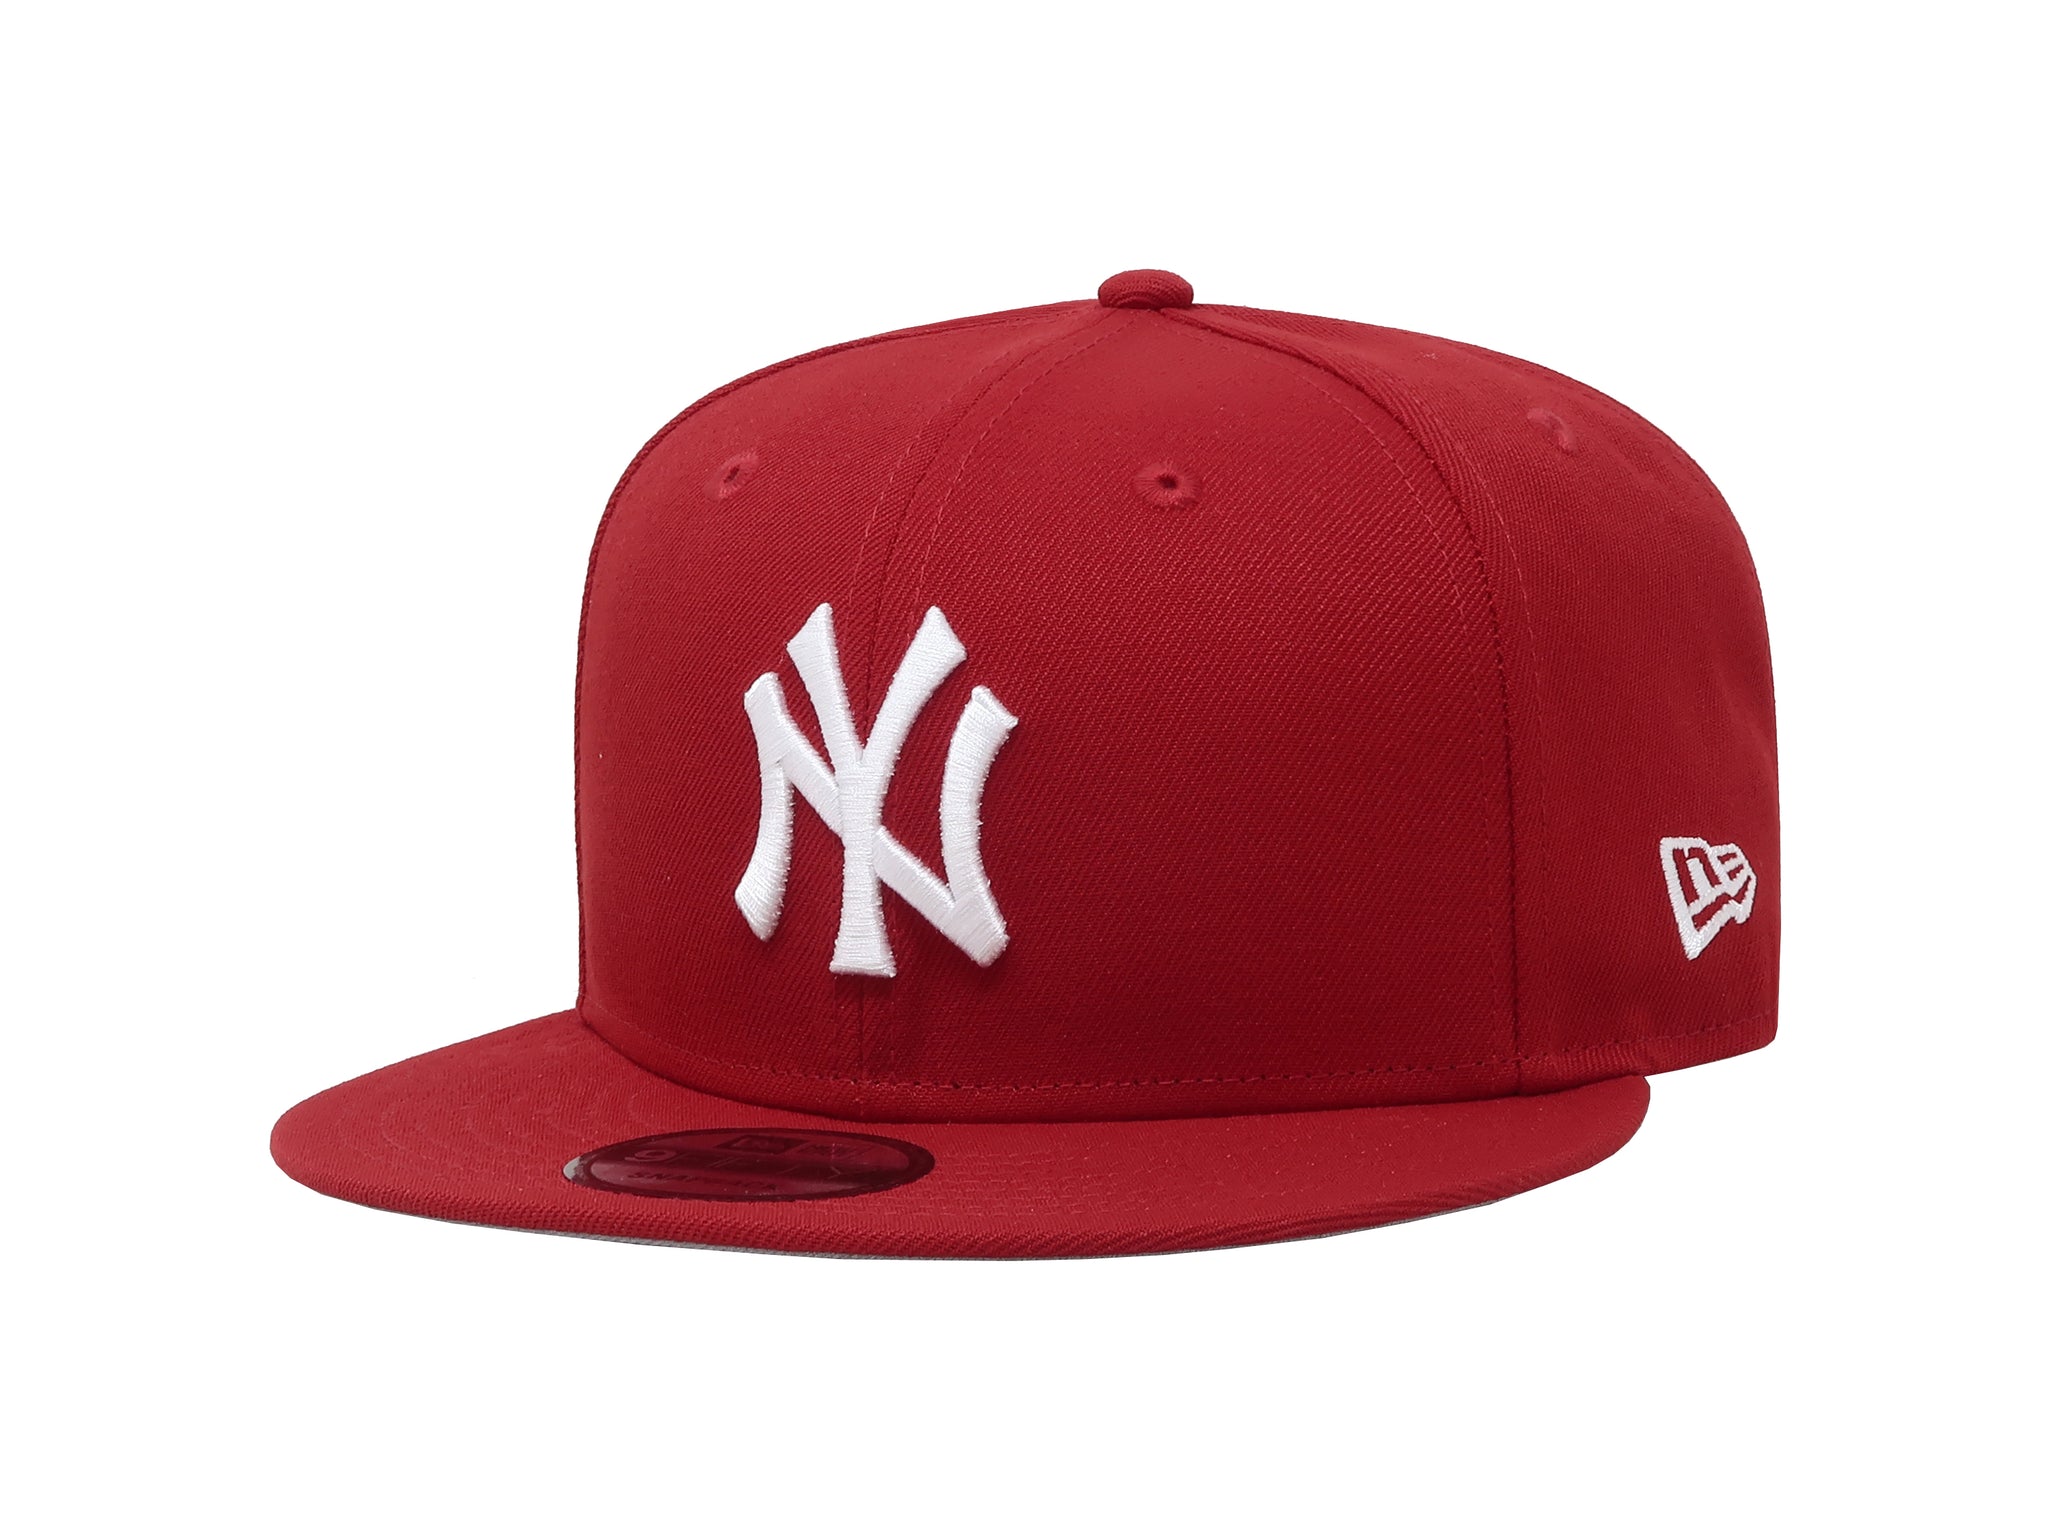 New Era 9Fifty Men's New York Yankees Basic Red SnapBack Cap